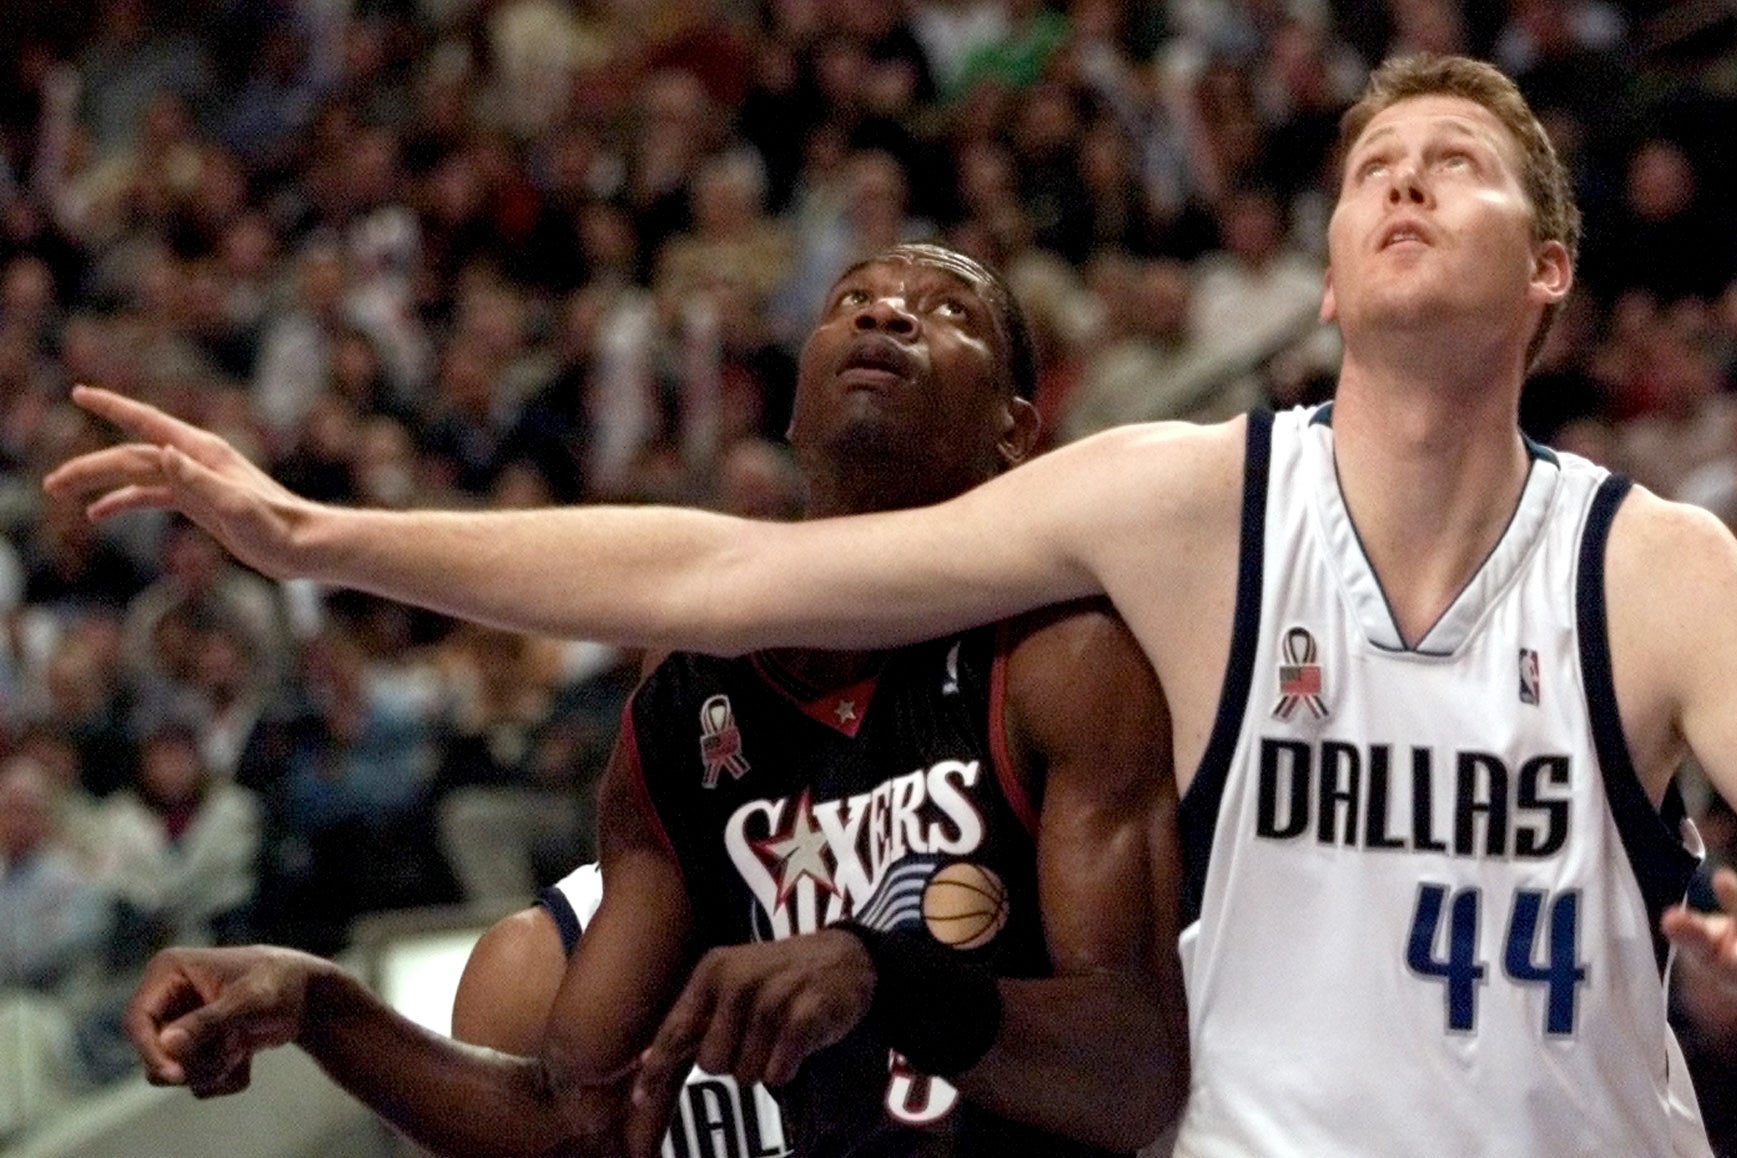 Philadelphia 76ers center Dikembe Mutombo and Dallas Mavericks center Shawn Bradley battle for position under the basket during a 2001 NBA game